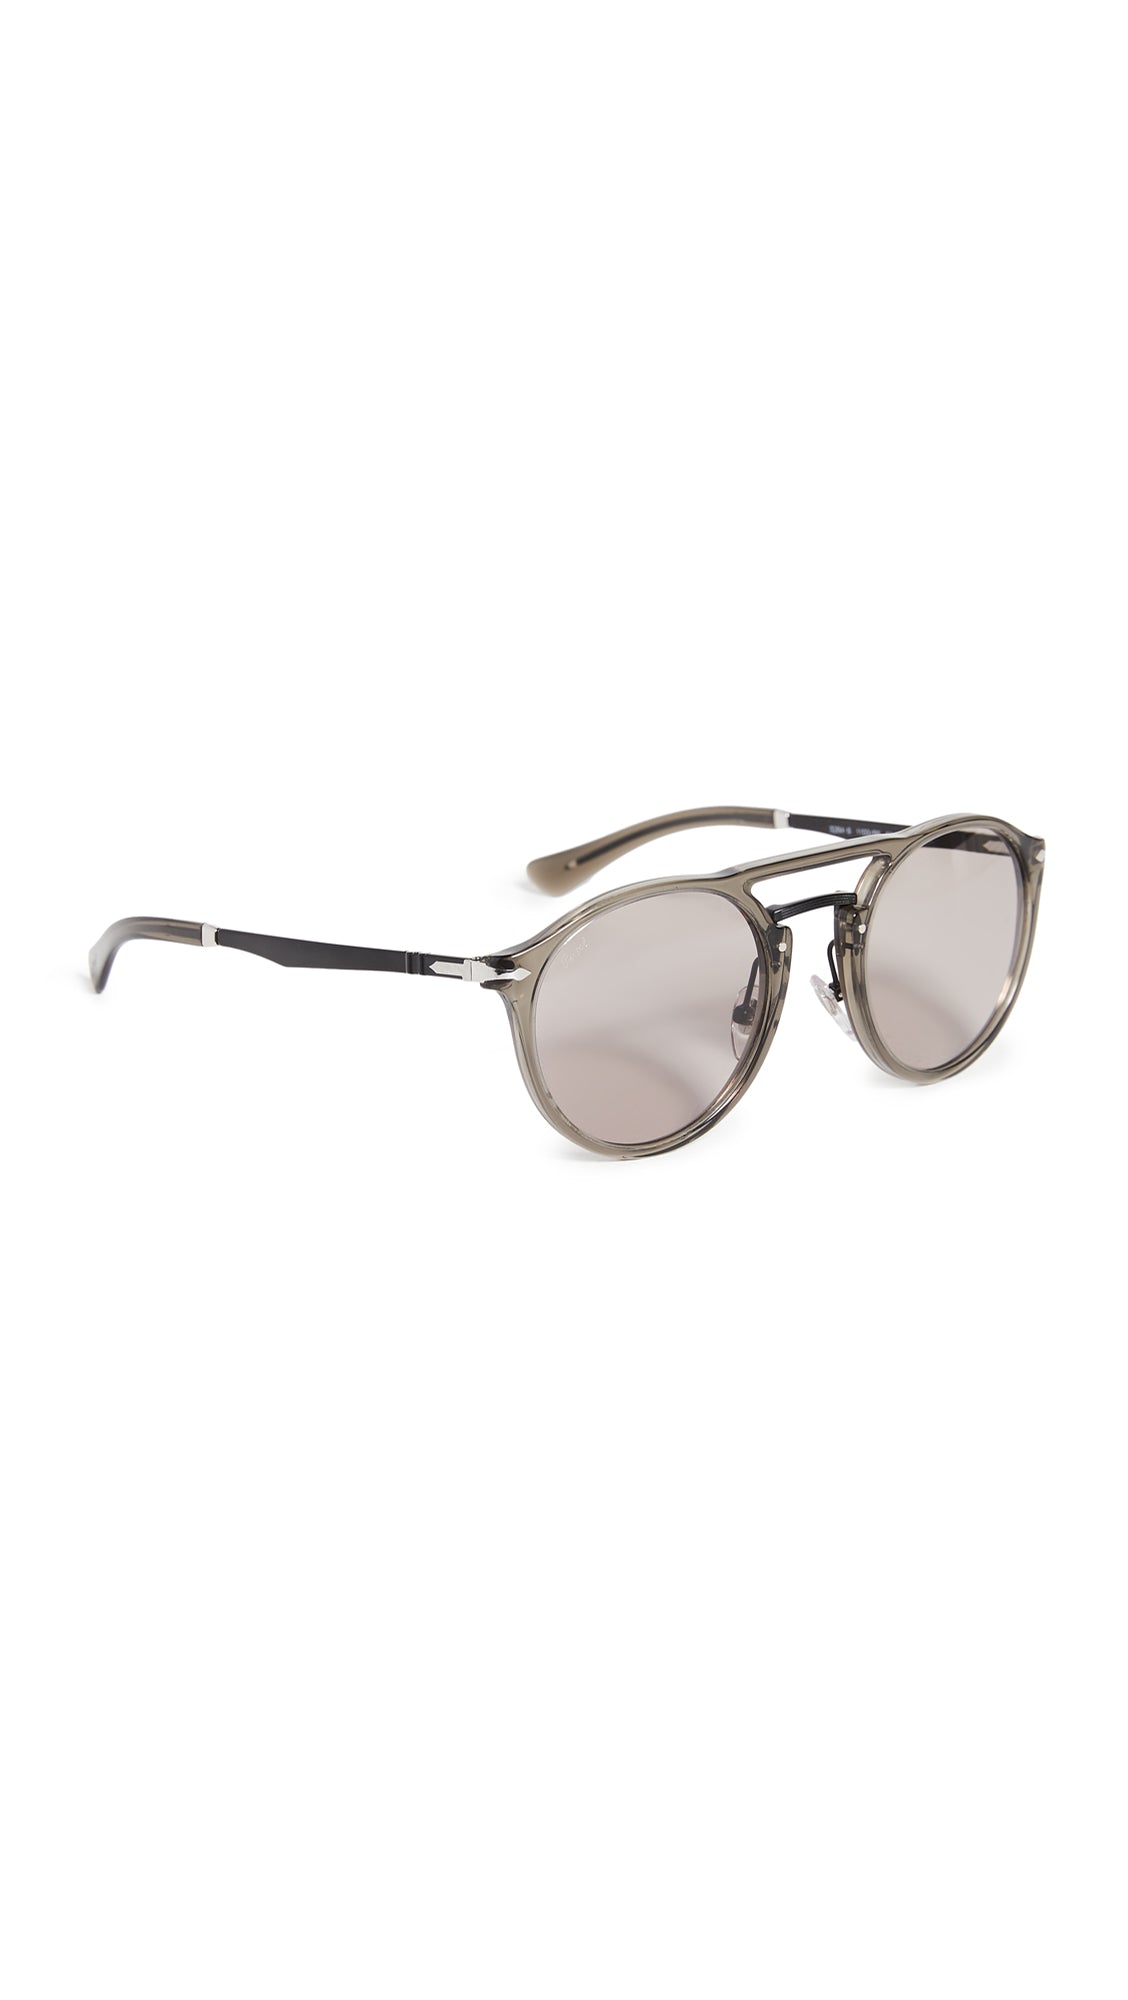 Persol Round Sunglasses PO3264S Opal Smoke/Antique Gray 